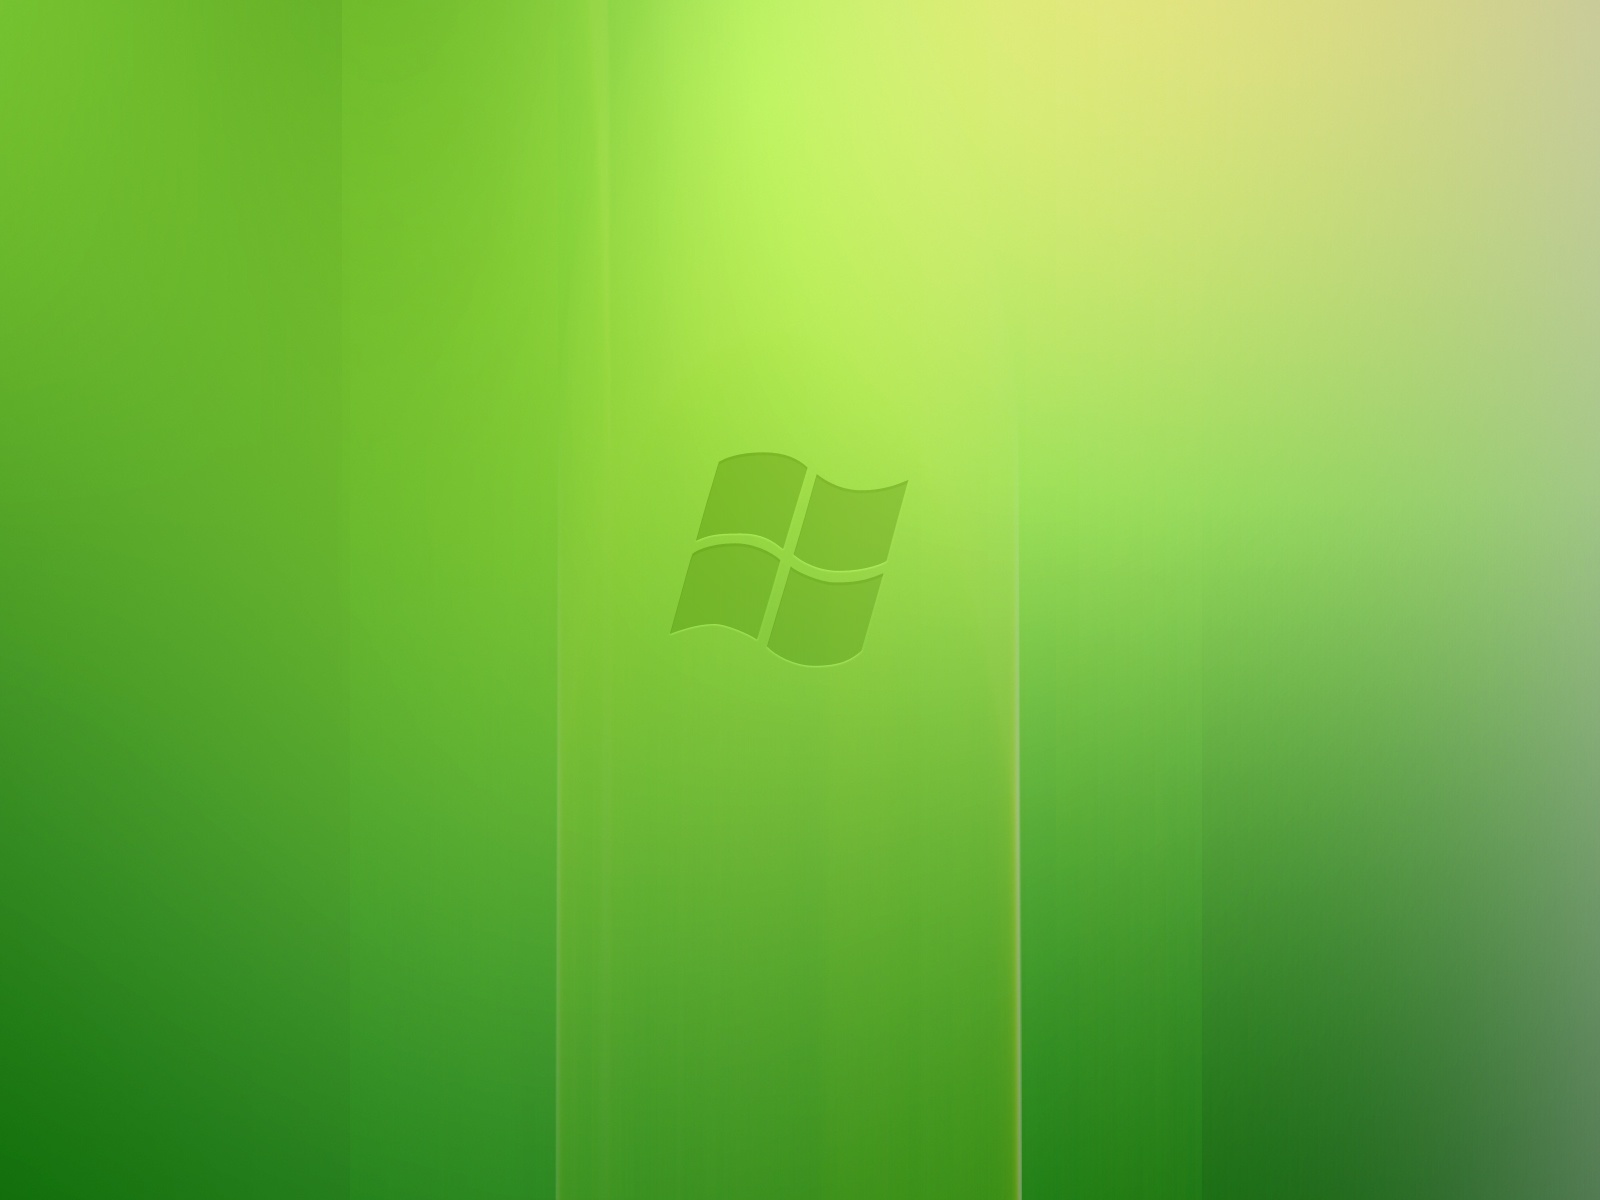 Windows Vista green wallpaper. Windows Vista green